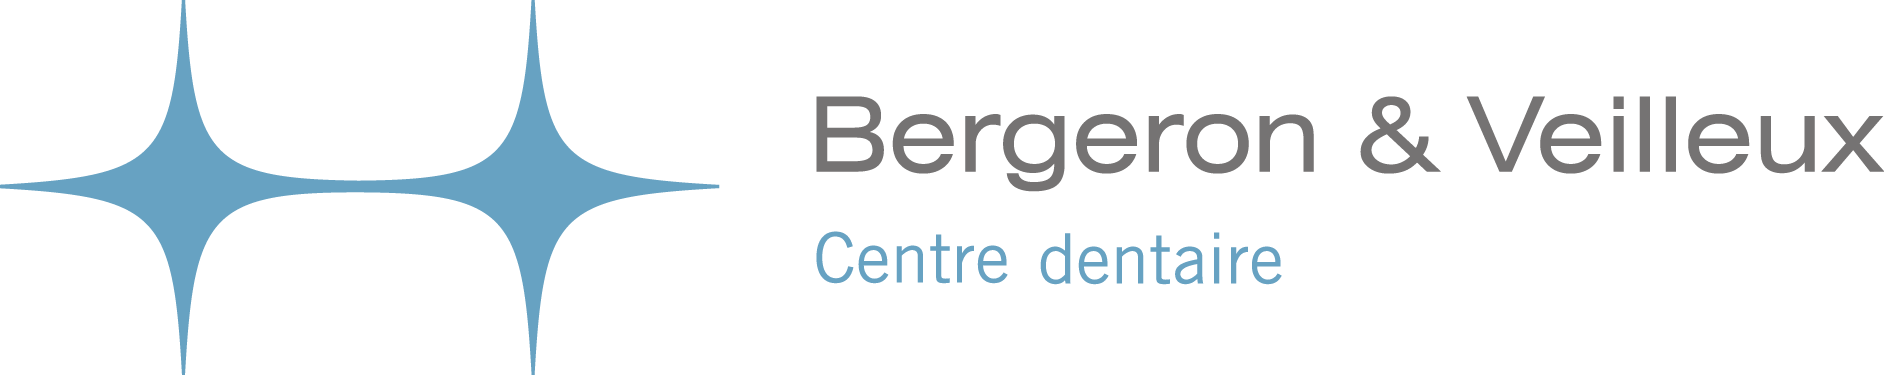 Centre dentaire Bergeron & Veilleux